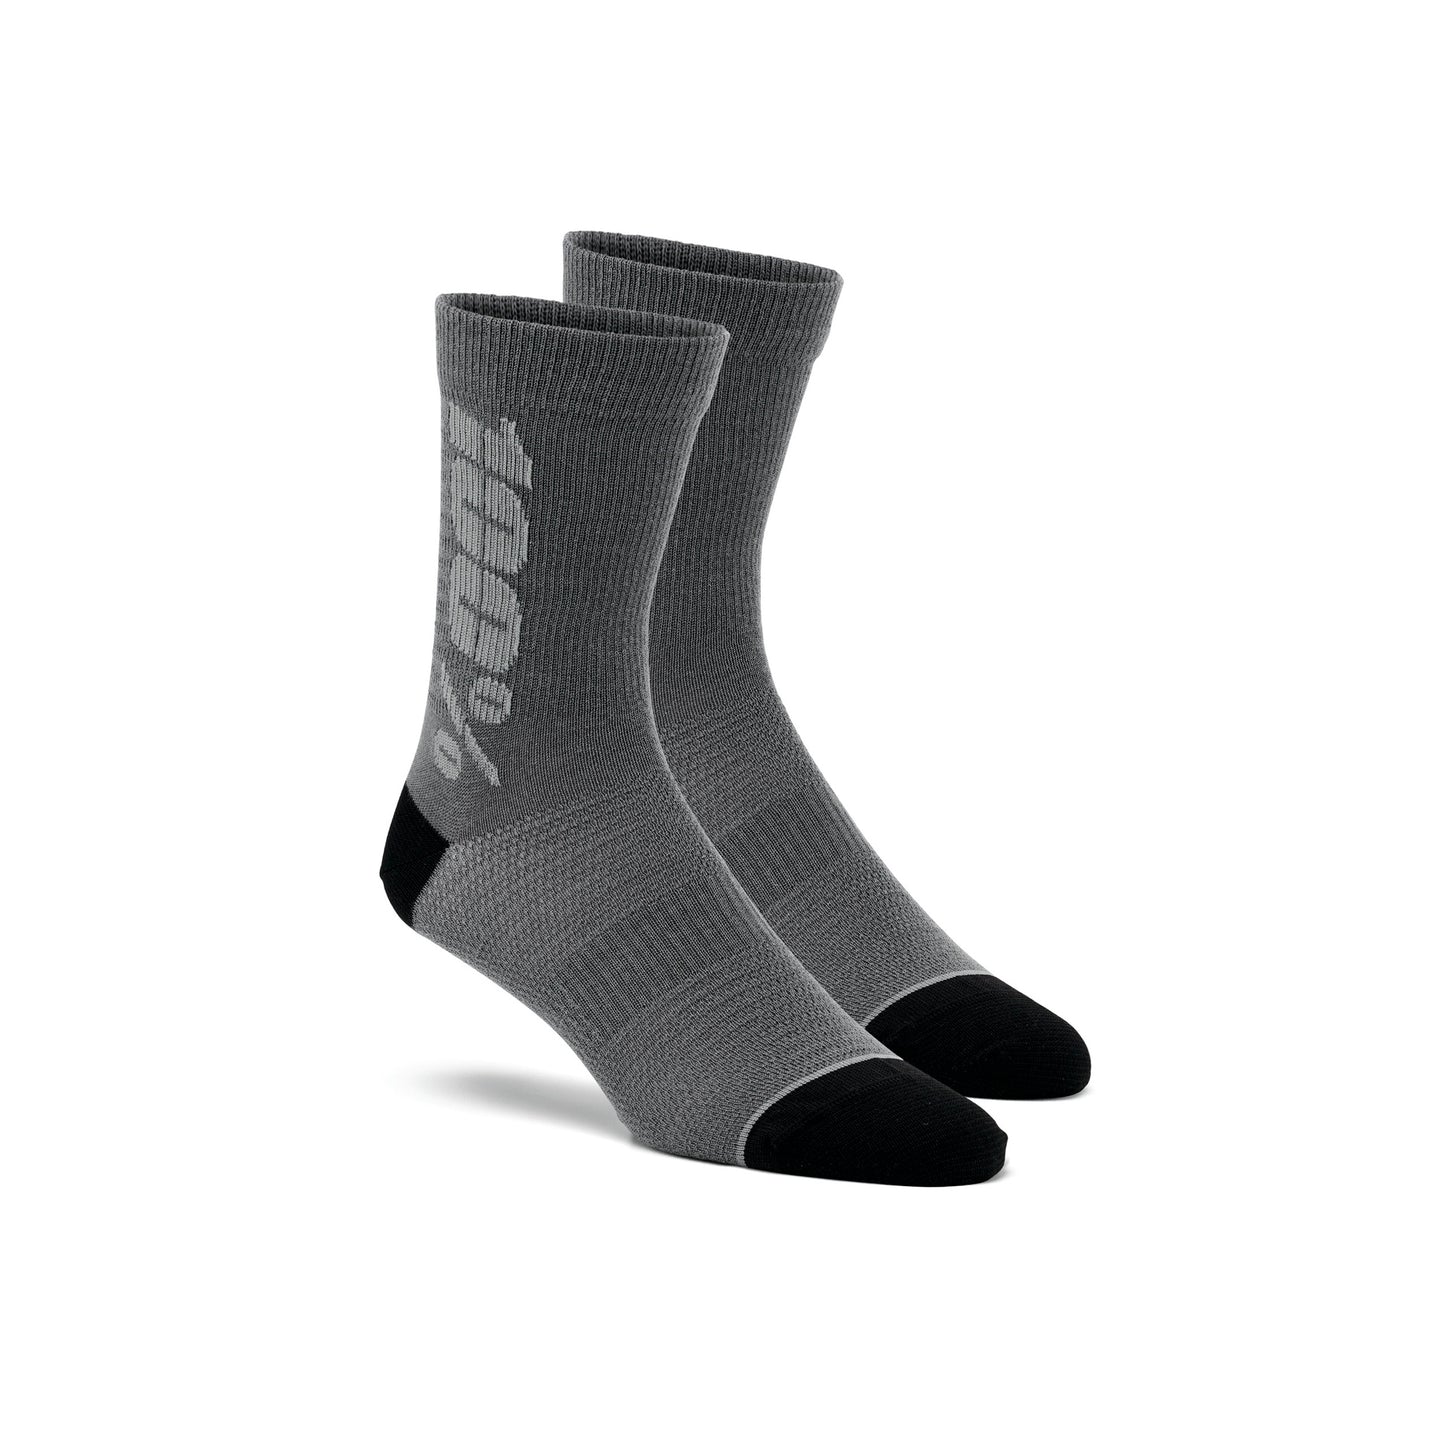 100 Percent Rythym Merino Wool Performance Socks - S-M - Charcoal - Grey